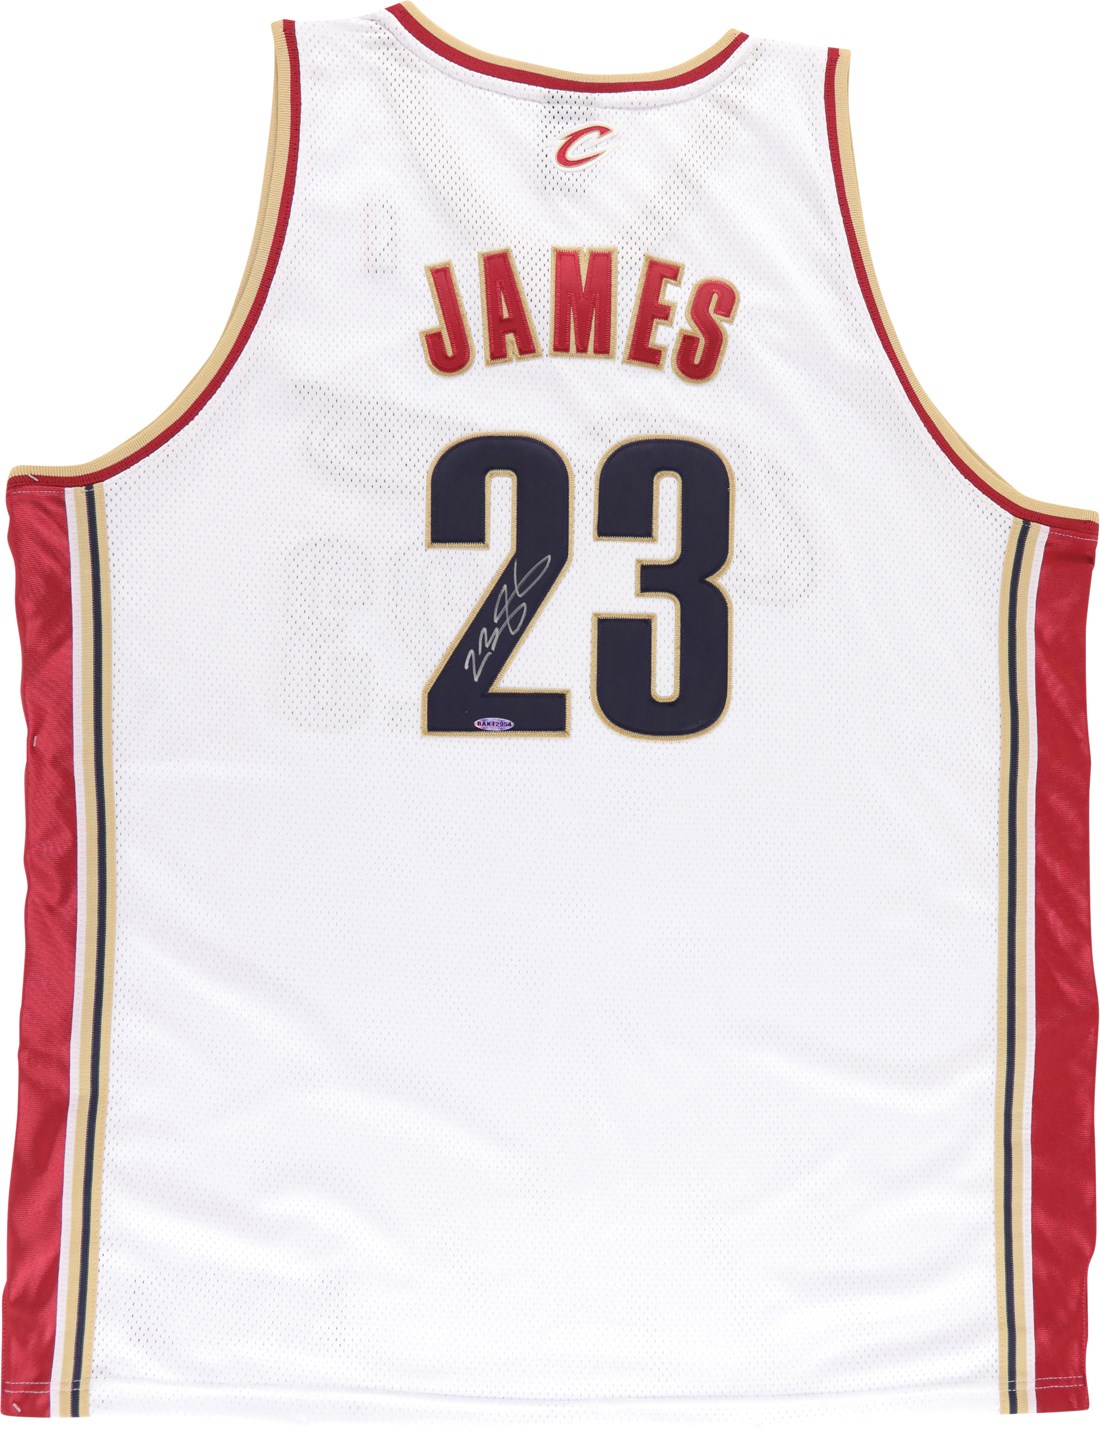 Basketball - 2003 LeBron James Signed Cleveland Cavaliers Jersey (UDA)